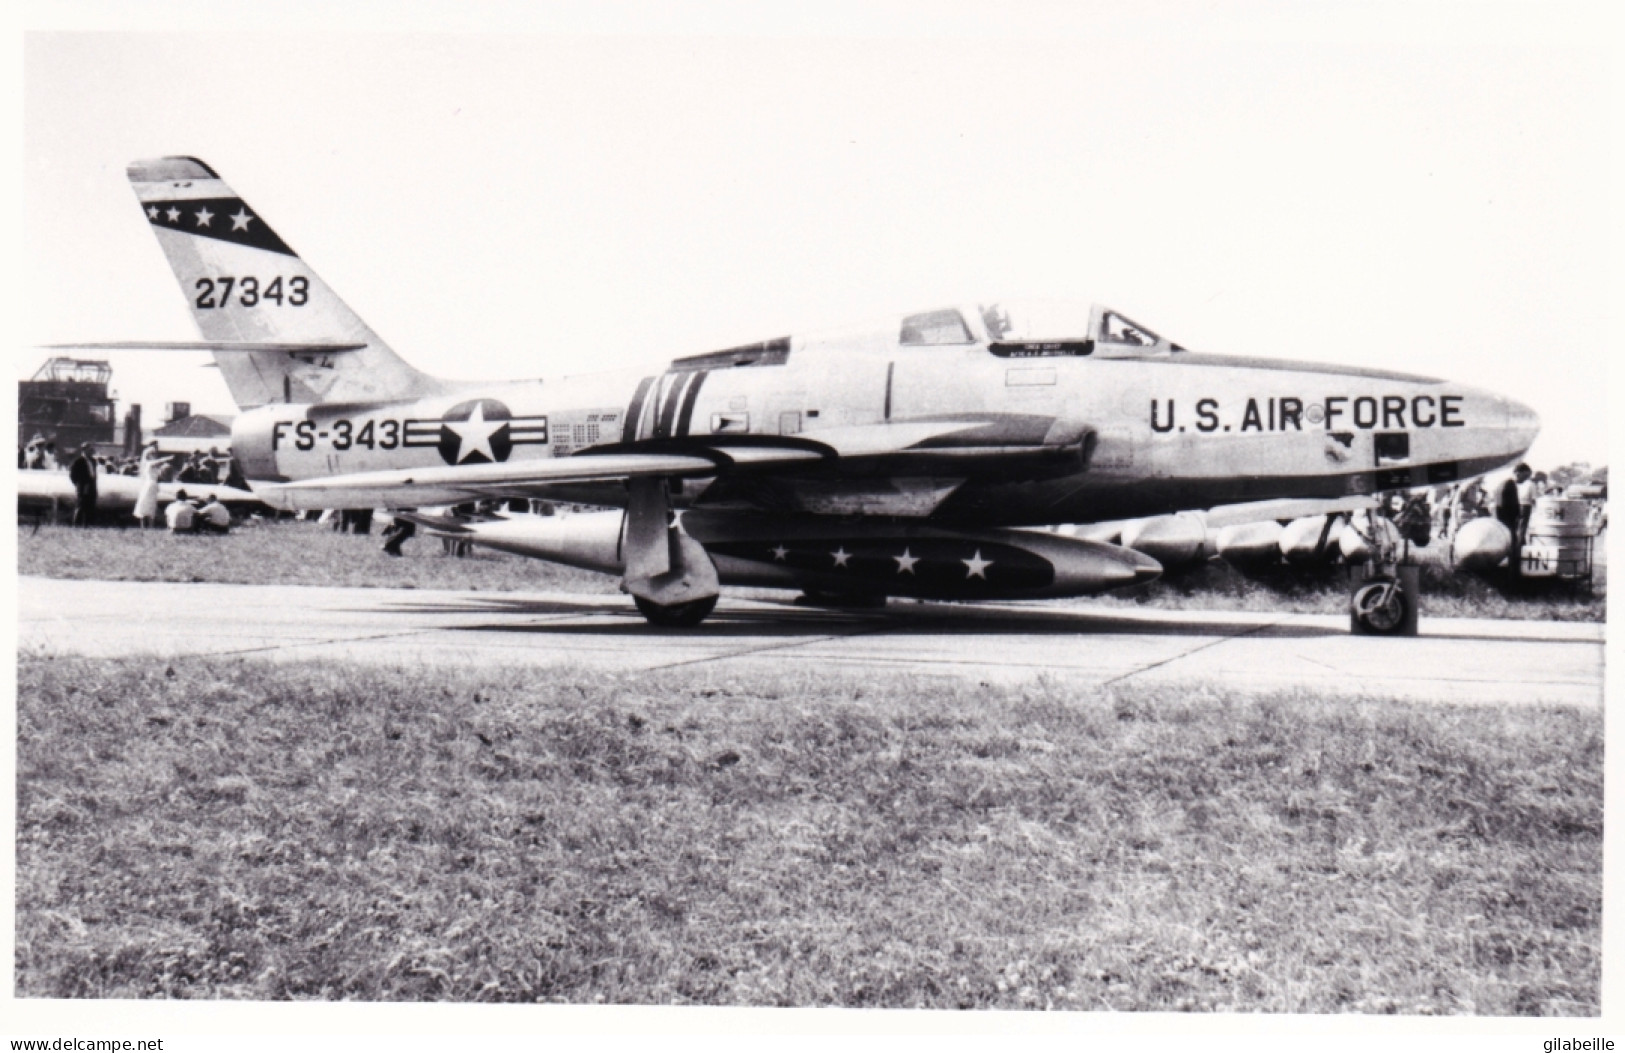 Photo Originale - Aviation - Militaria - Avion Republic F-84F Thunderstreak  - Luftfahrt